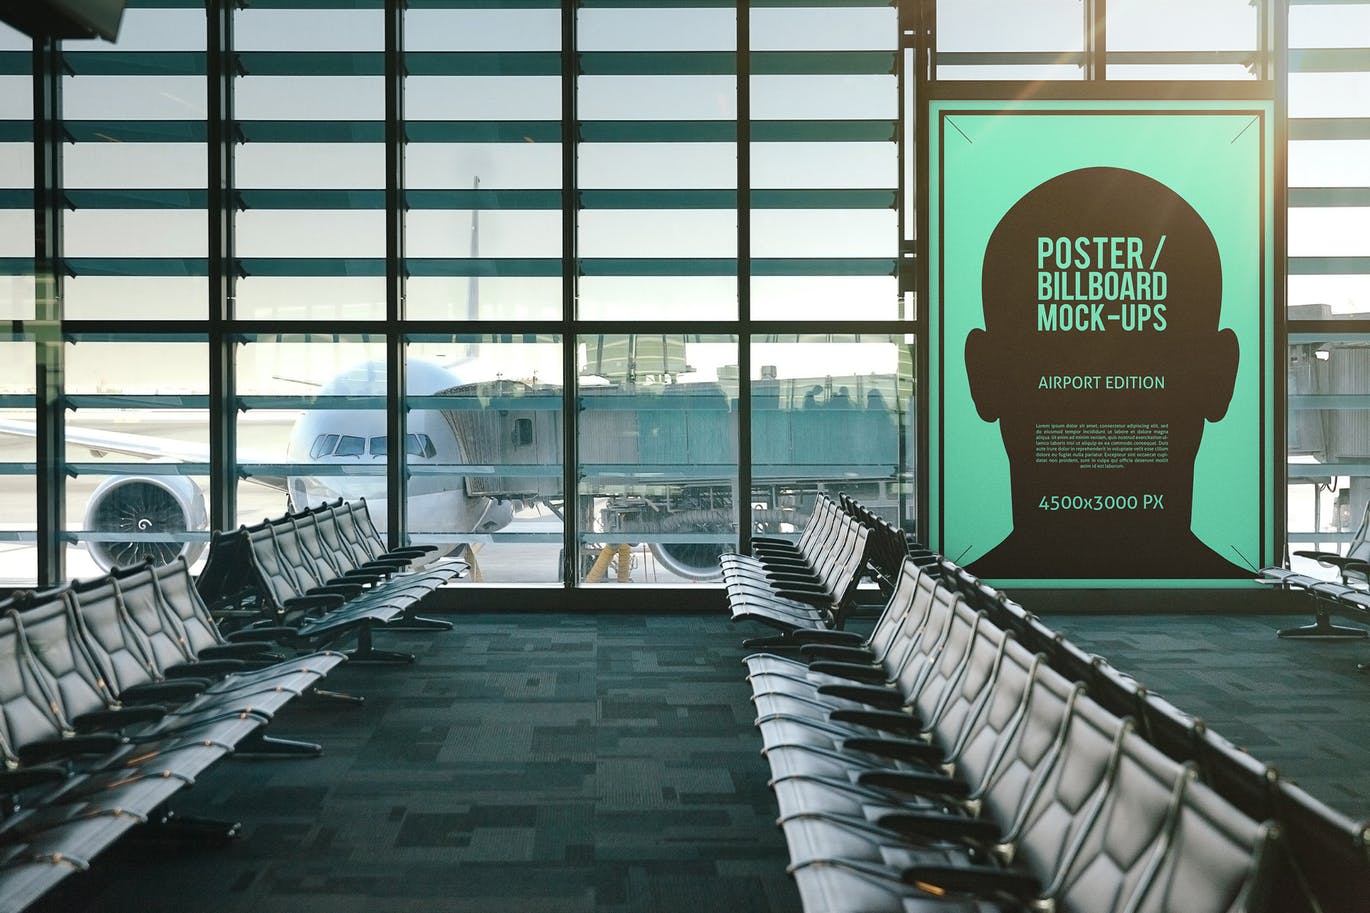 机场候机室海报/广告牌样机素材库精选模板#1 Poster / Billboard Mock-ups – Airport Edition #1插图